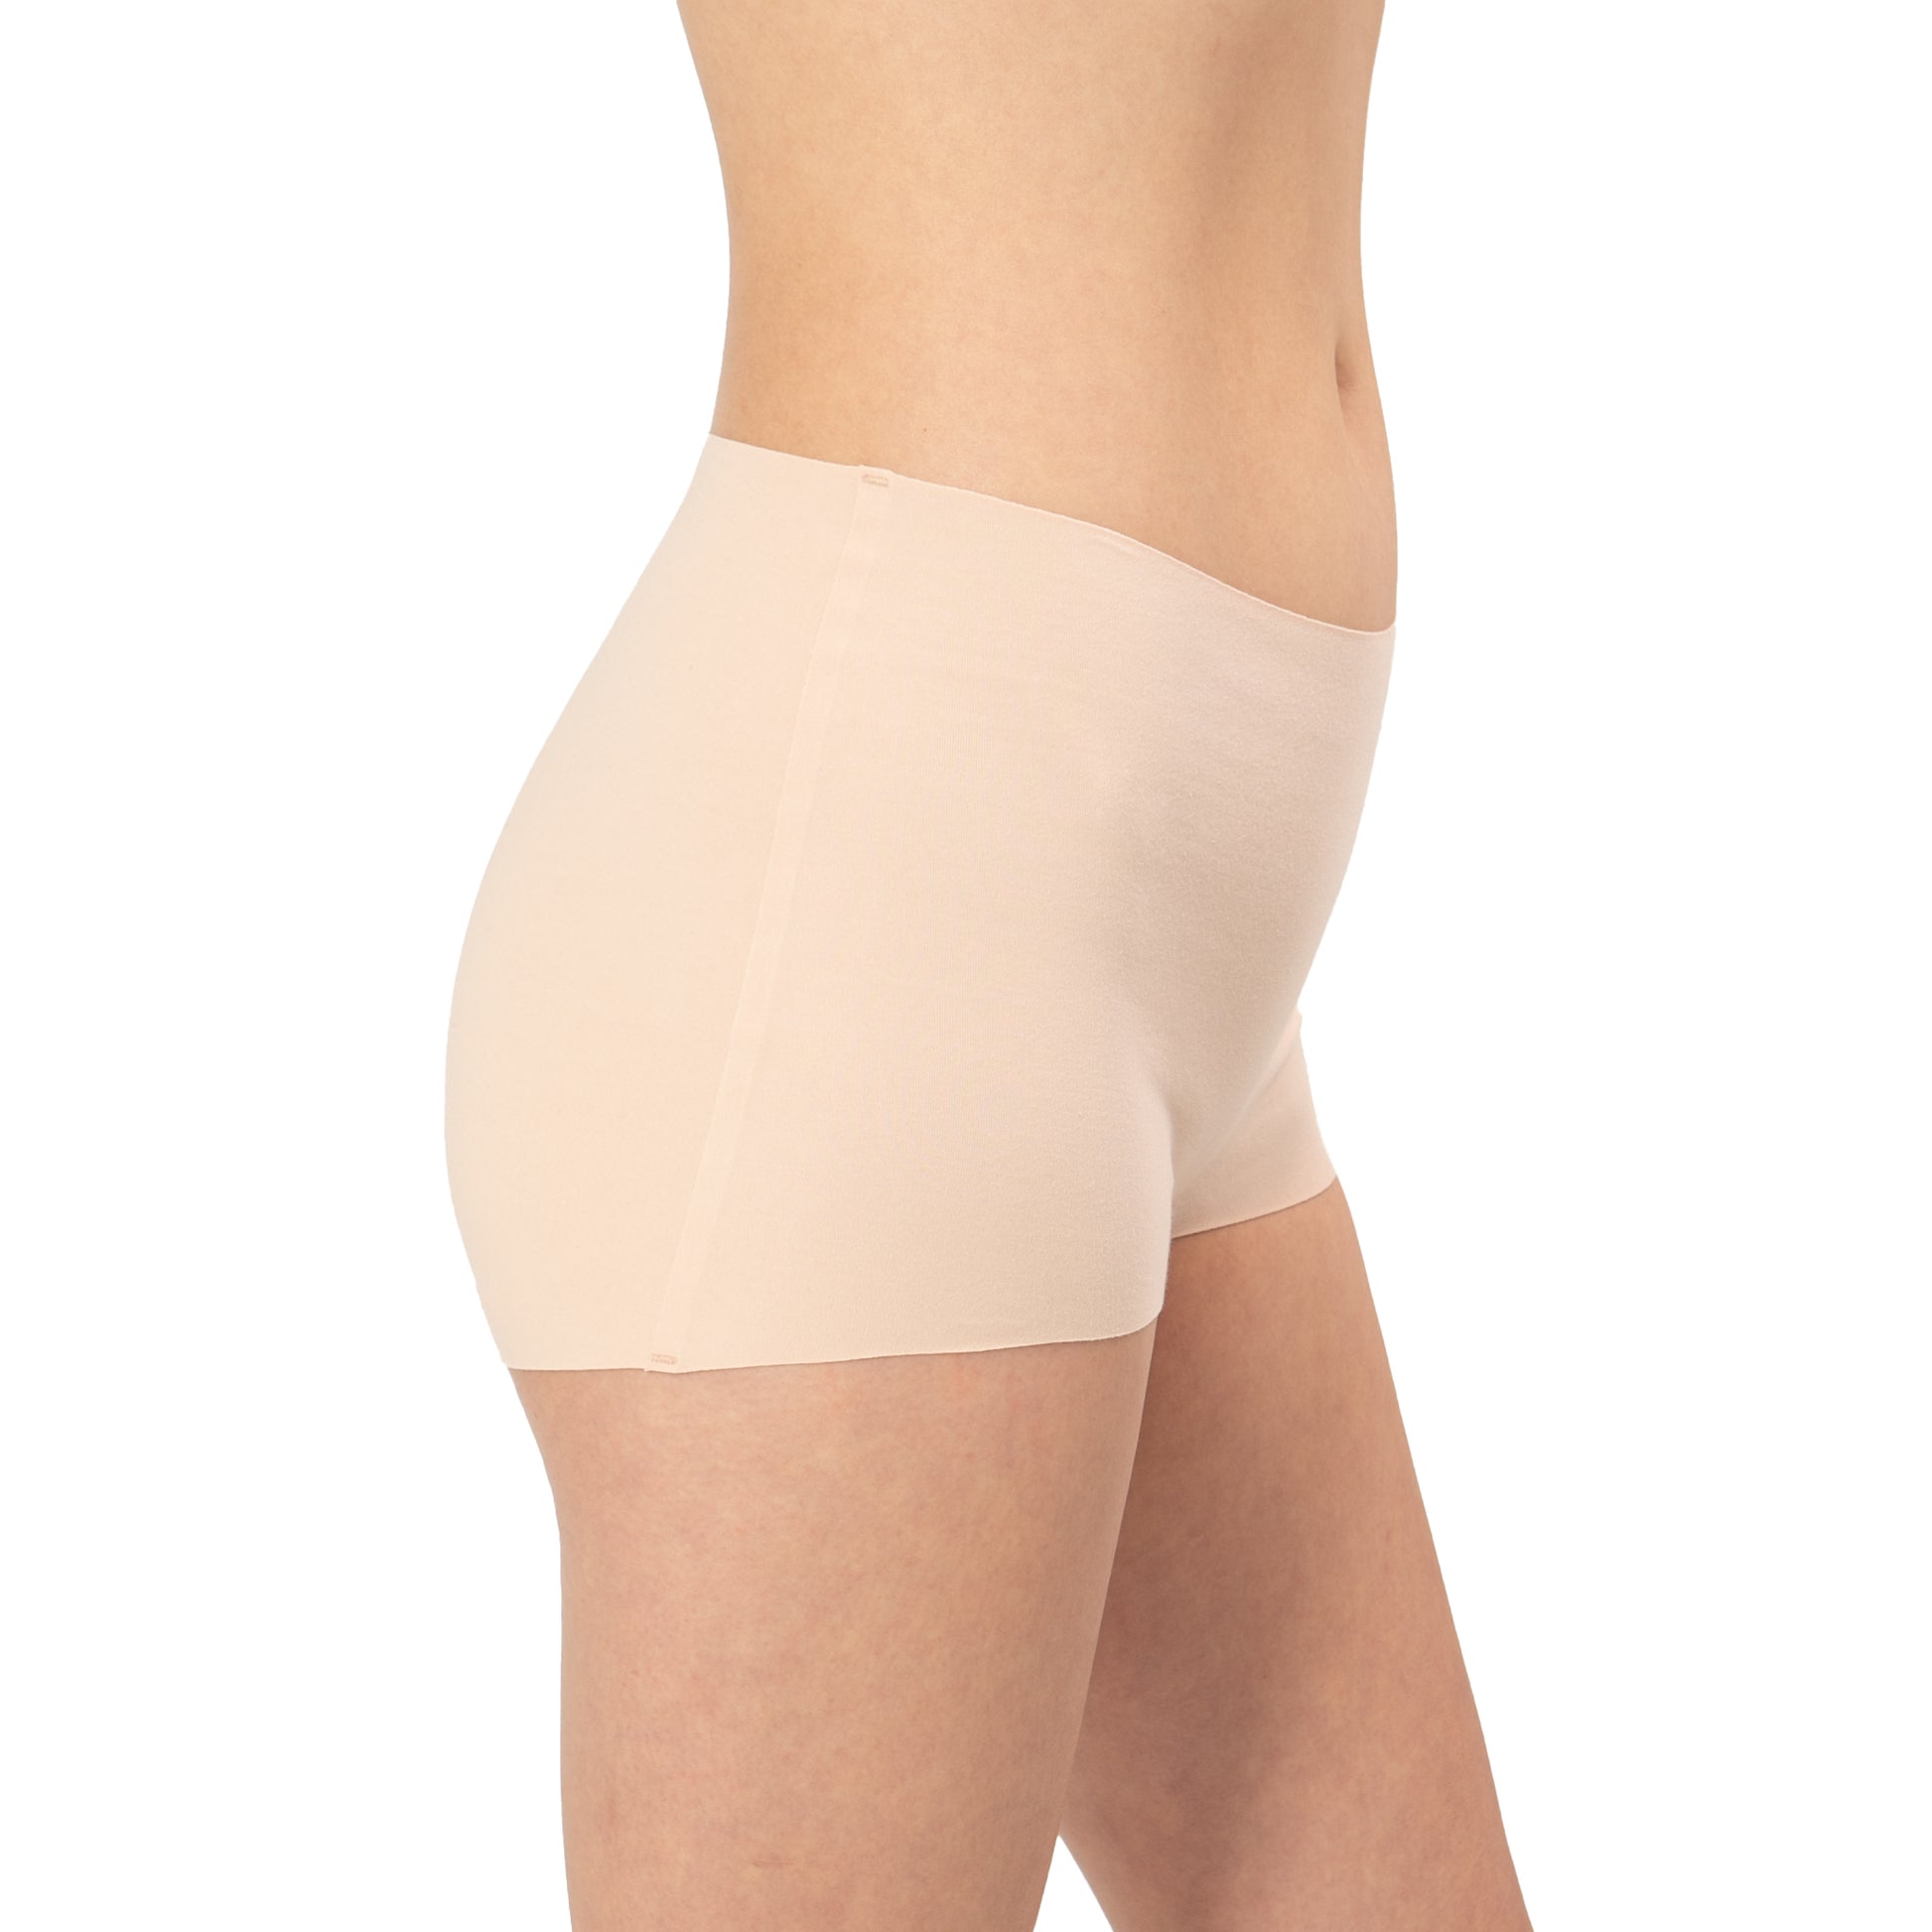 Women's Organic Cotton Shortie Underwear in color Pale - Side View